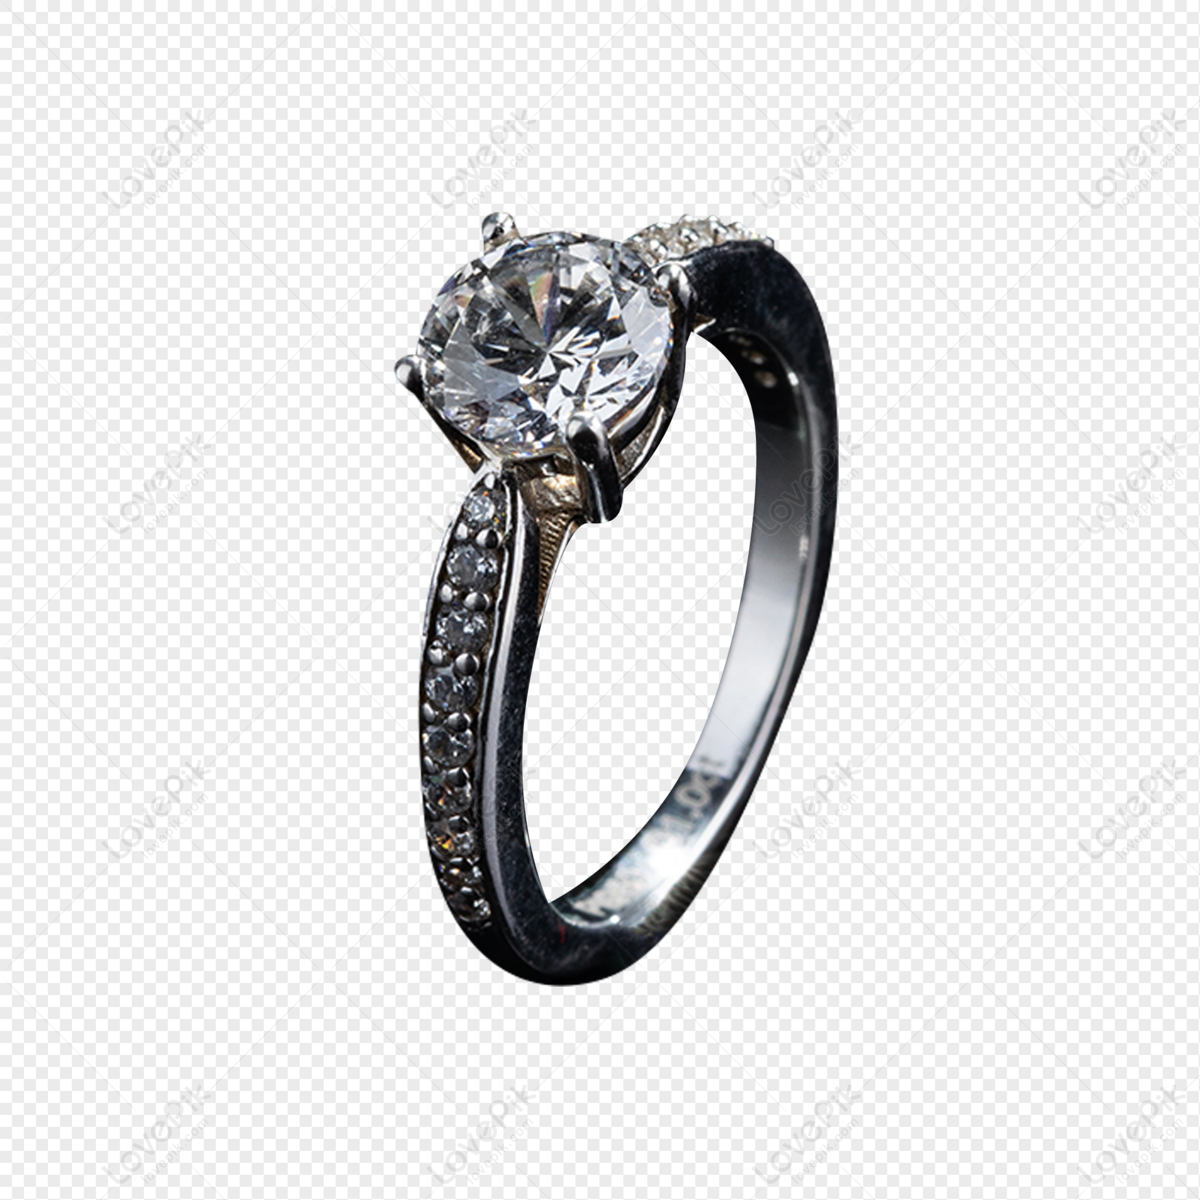 0.9 ct. Natural Diamond Engagement Ring in Platinum | Shane Co.